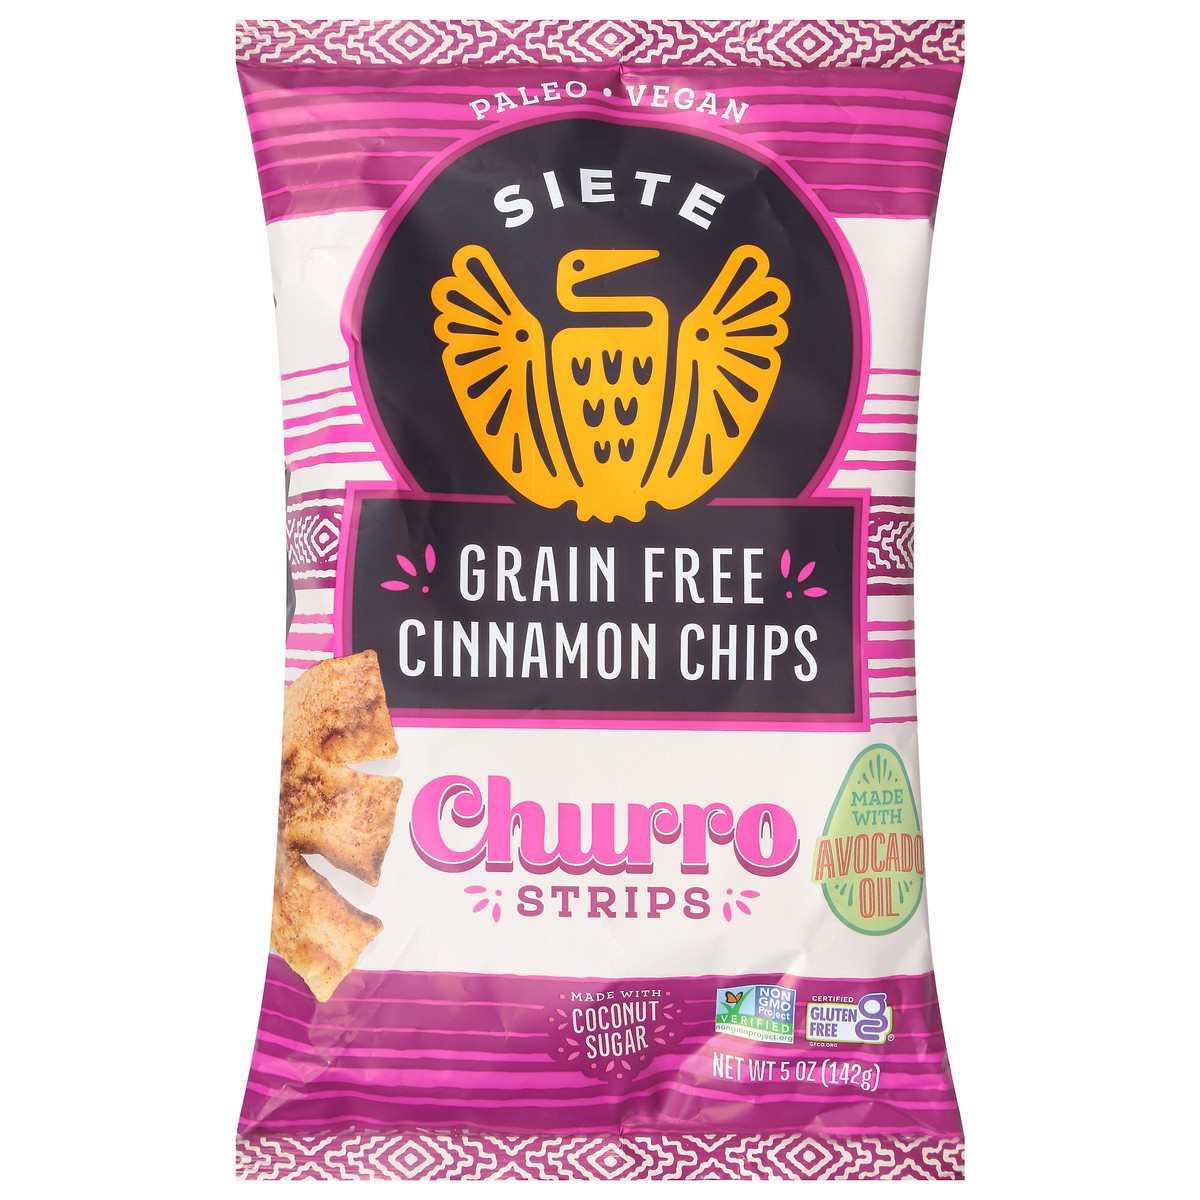 slide 1 of 9, Siete Grain Free Cinnamon Chips Churro Strips 5 oz, 1 ct